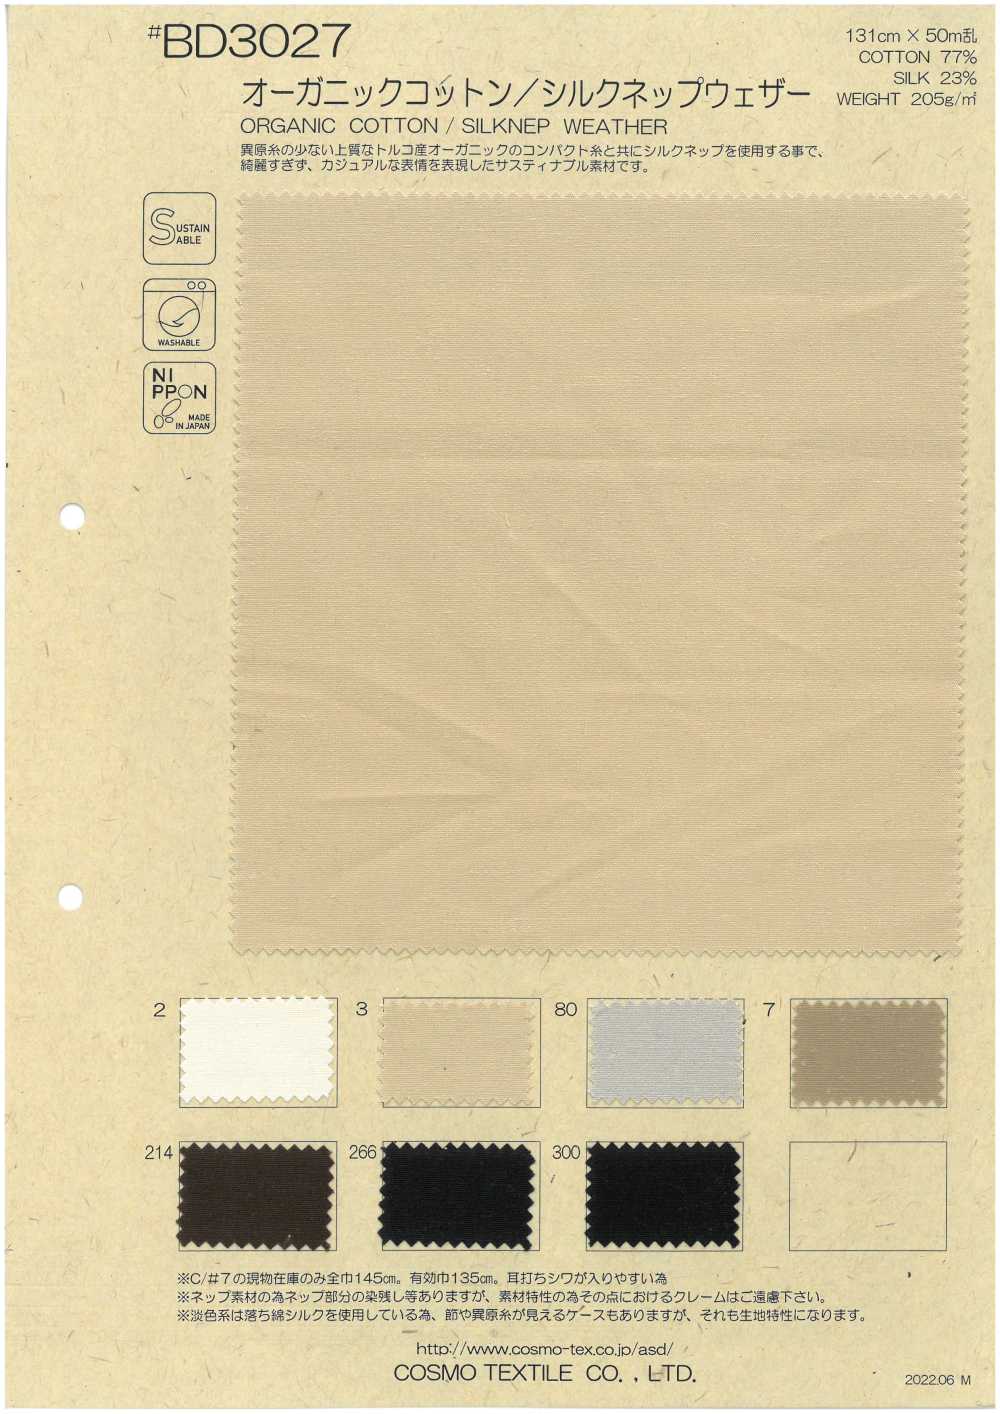 BD3027 Chiffon En Coton Biologique/soie Nep[Fabrication De Textile] COSMO TEXTILE